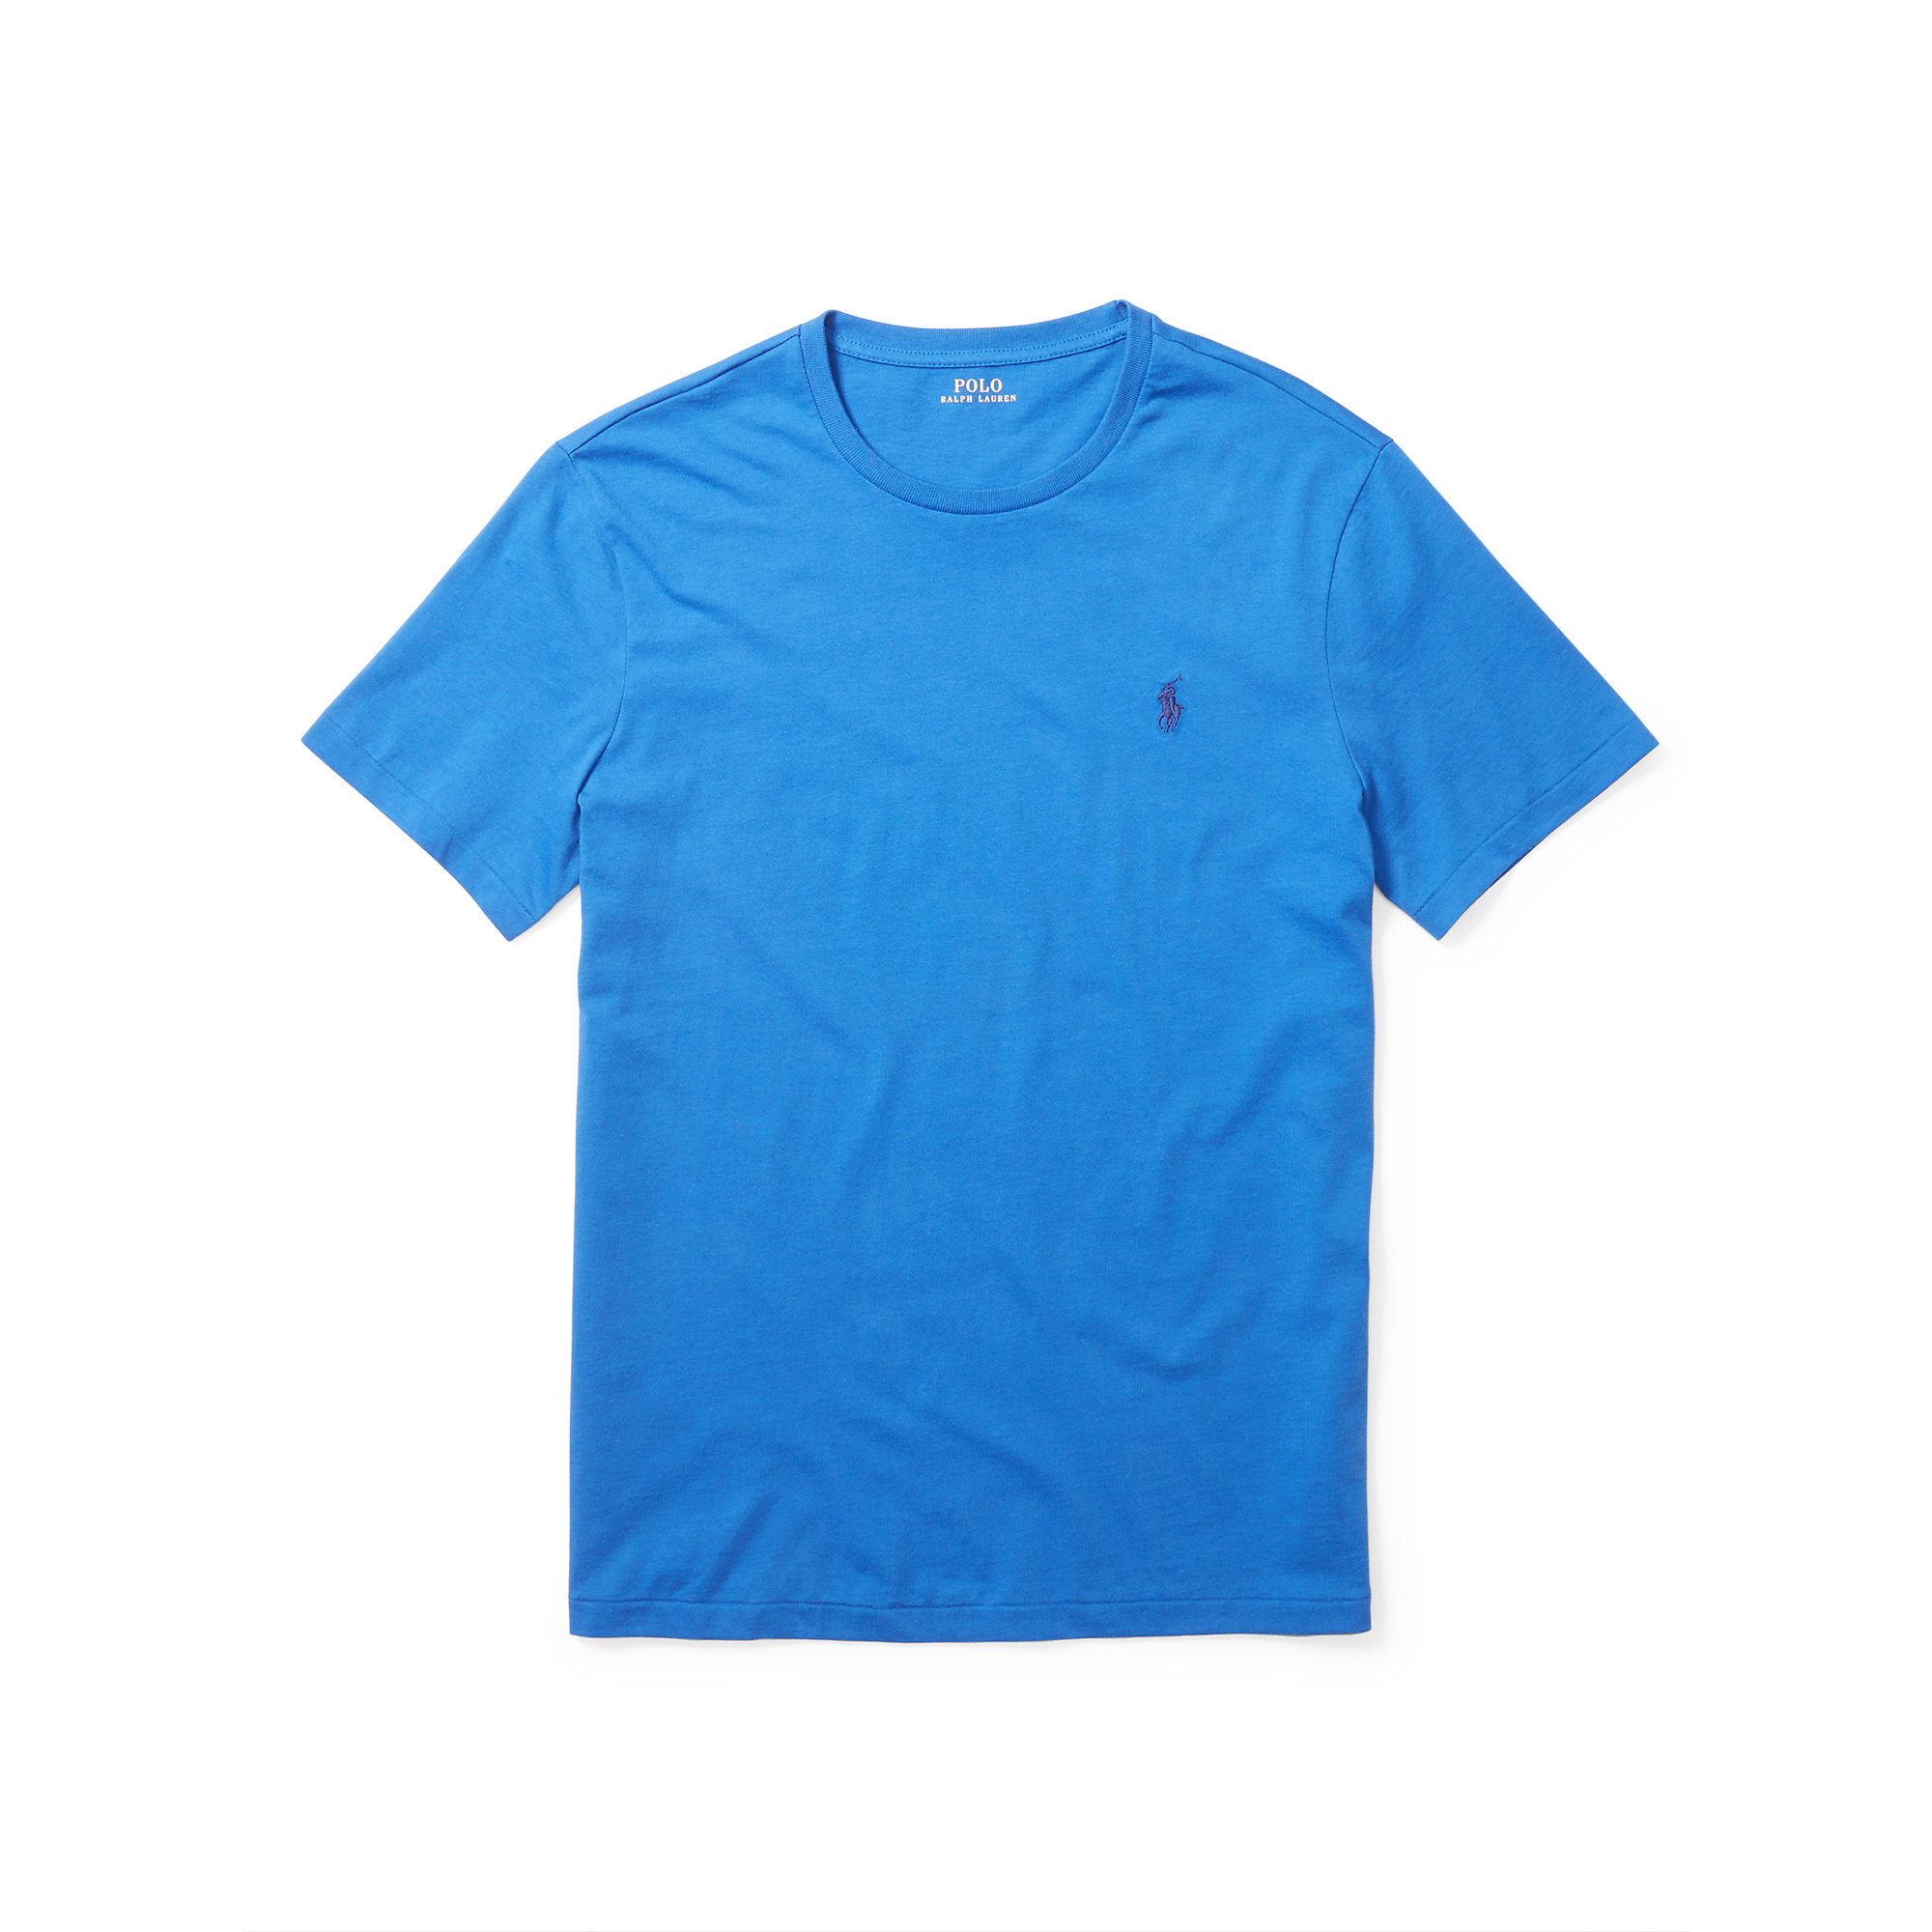 Polo ralph lauren Custom-fit Cotton T-shirt in Blue for Men | Lyst